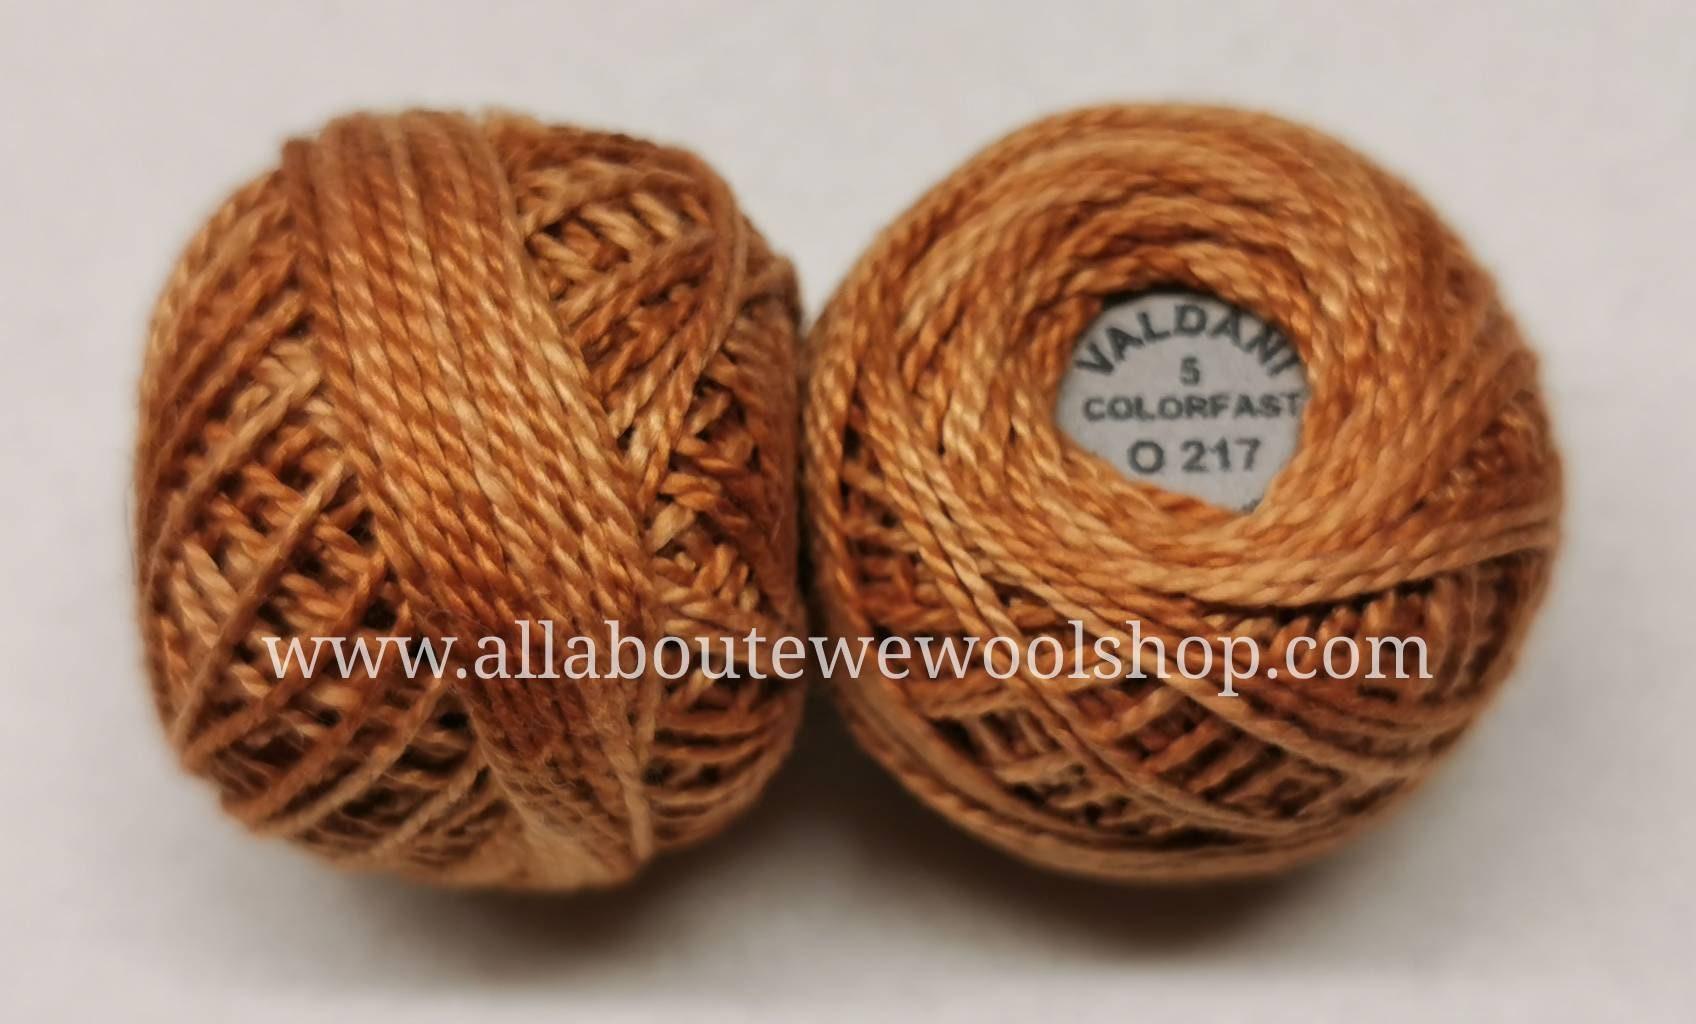 O217 #5 Valdani Pearl/Perle Cotton Thread - All About Ewe Wool Shop